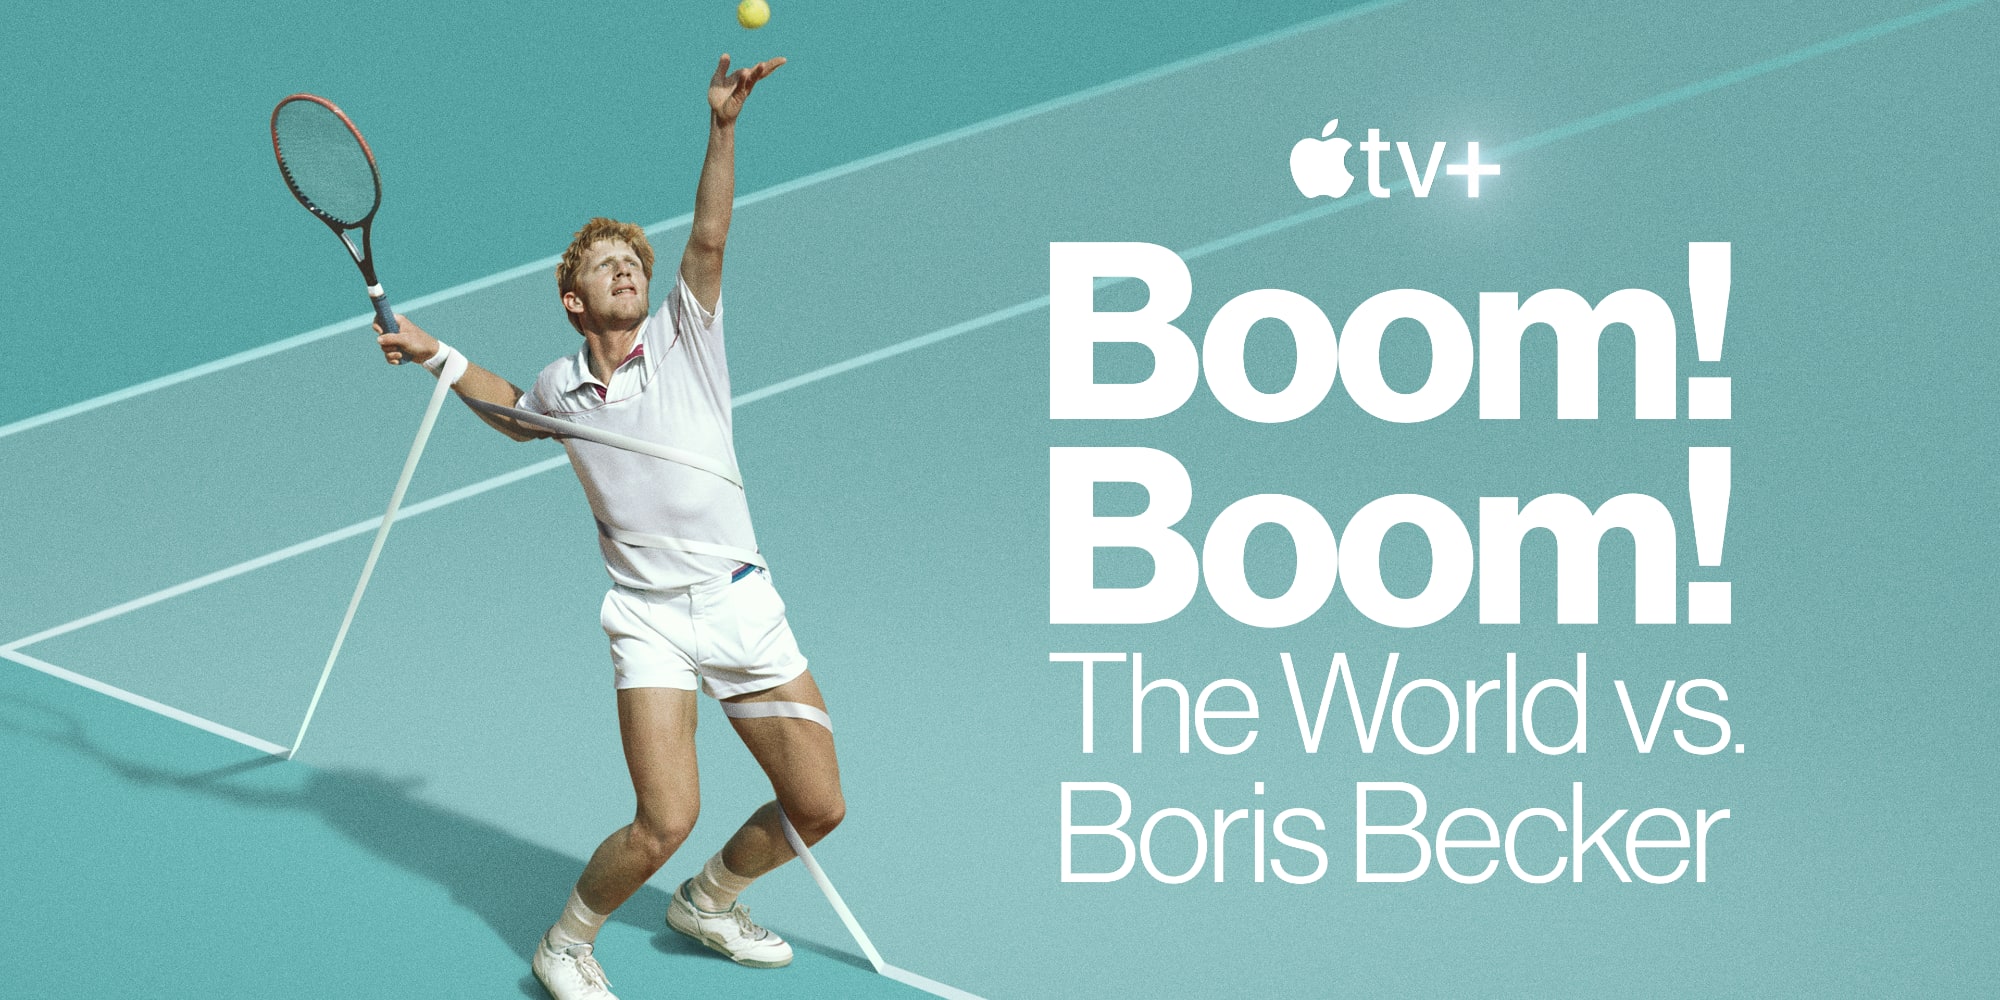 Documentary on tennis player Boris Becker streaming now on Apple TV+